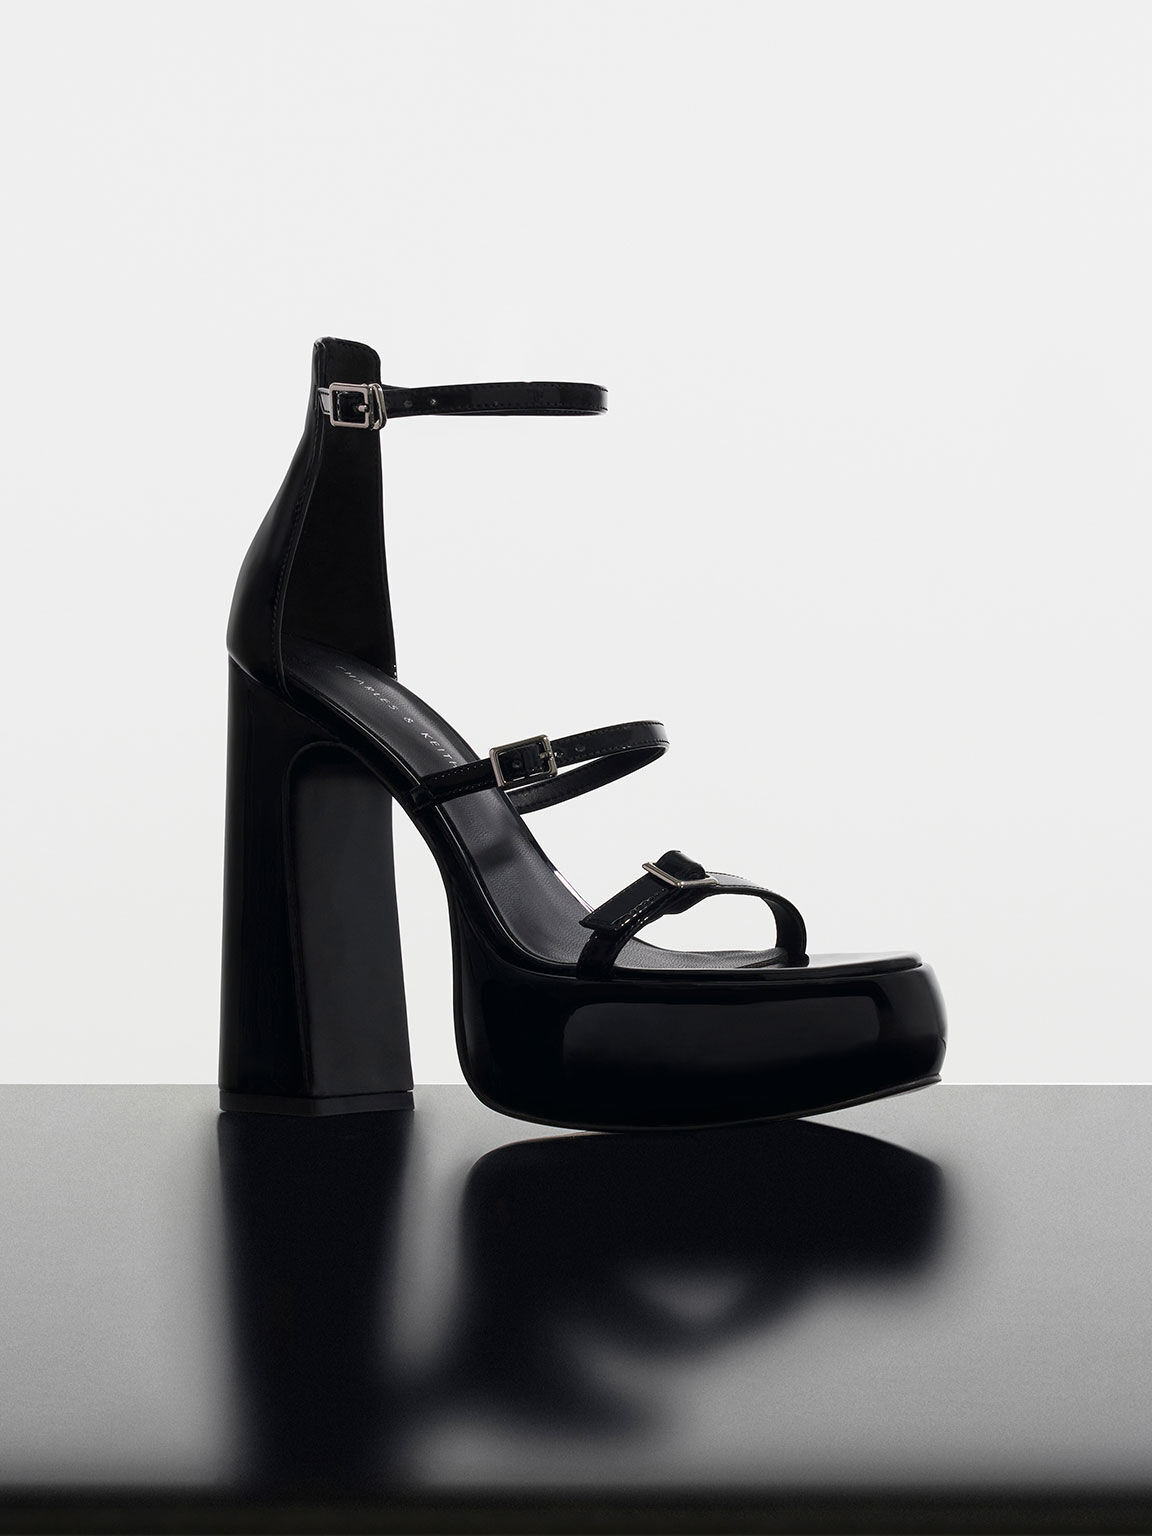 womens high heel shoes size 10 | eBay